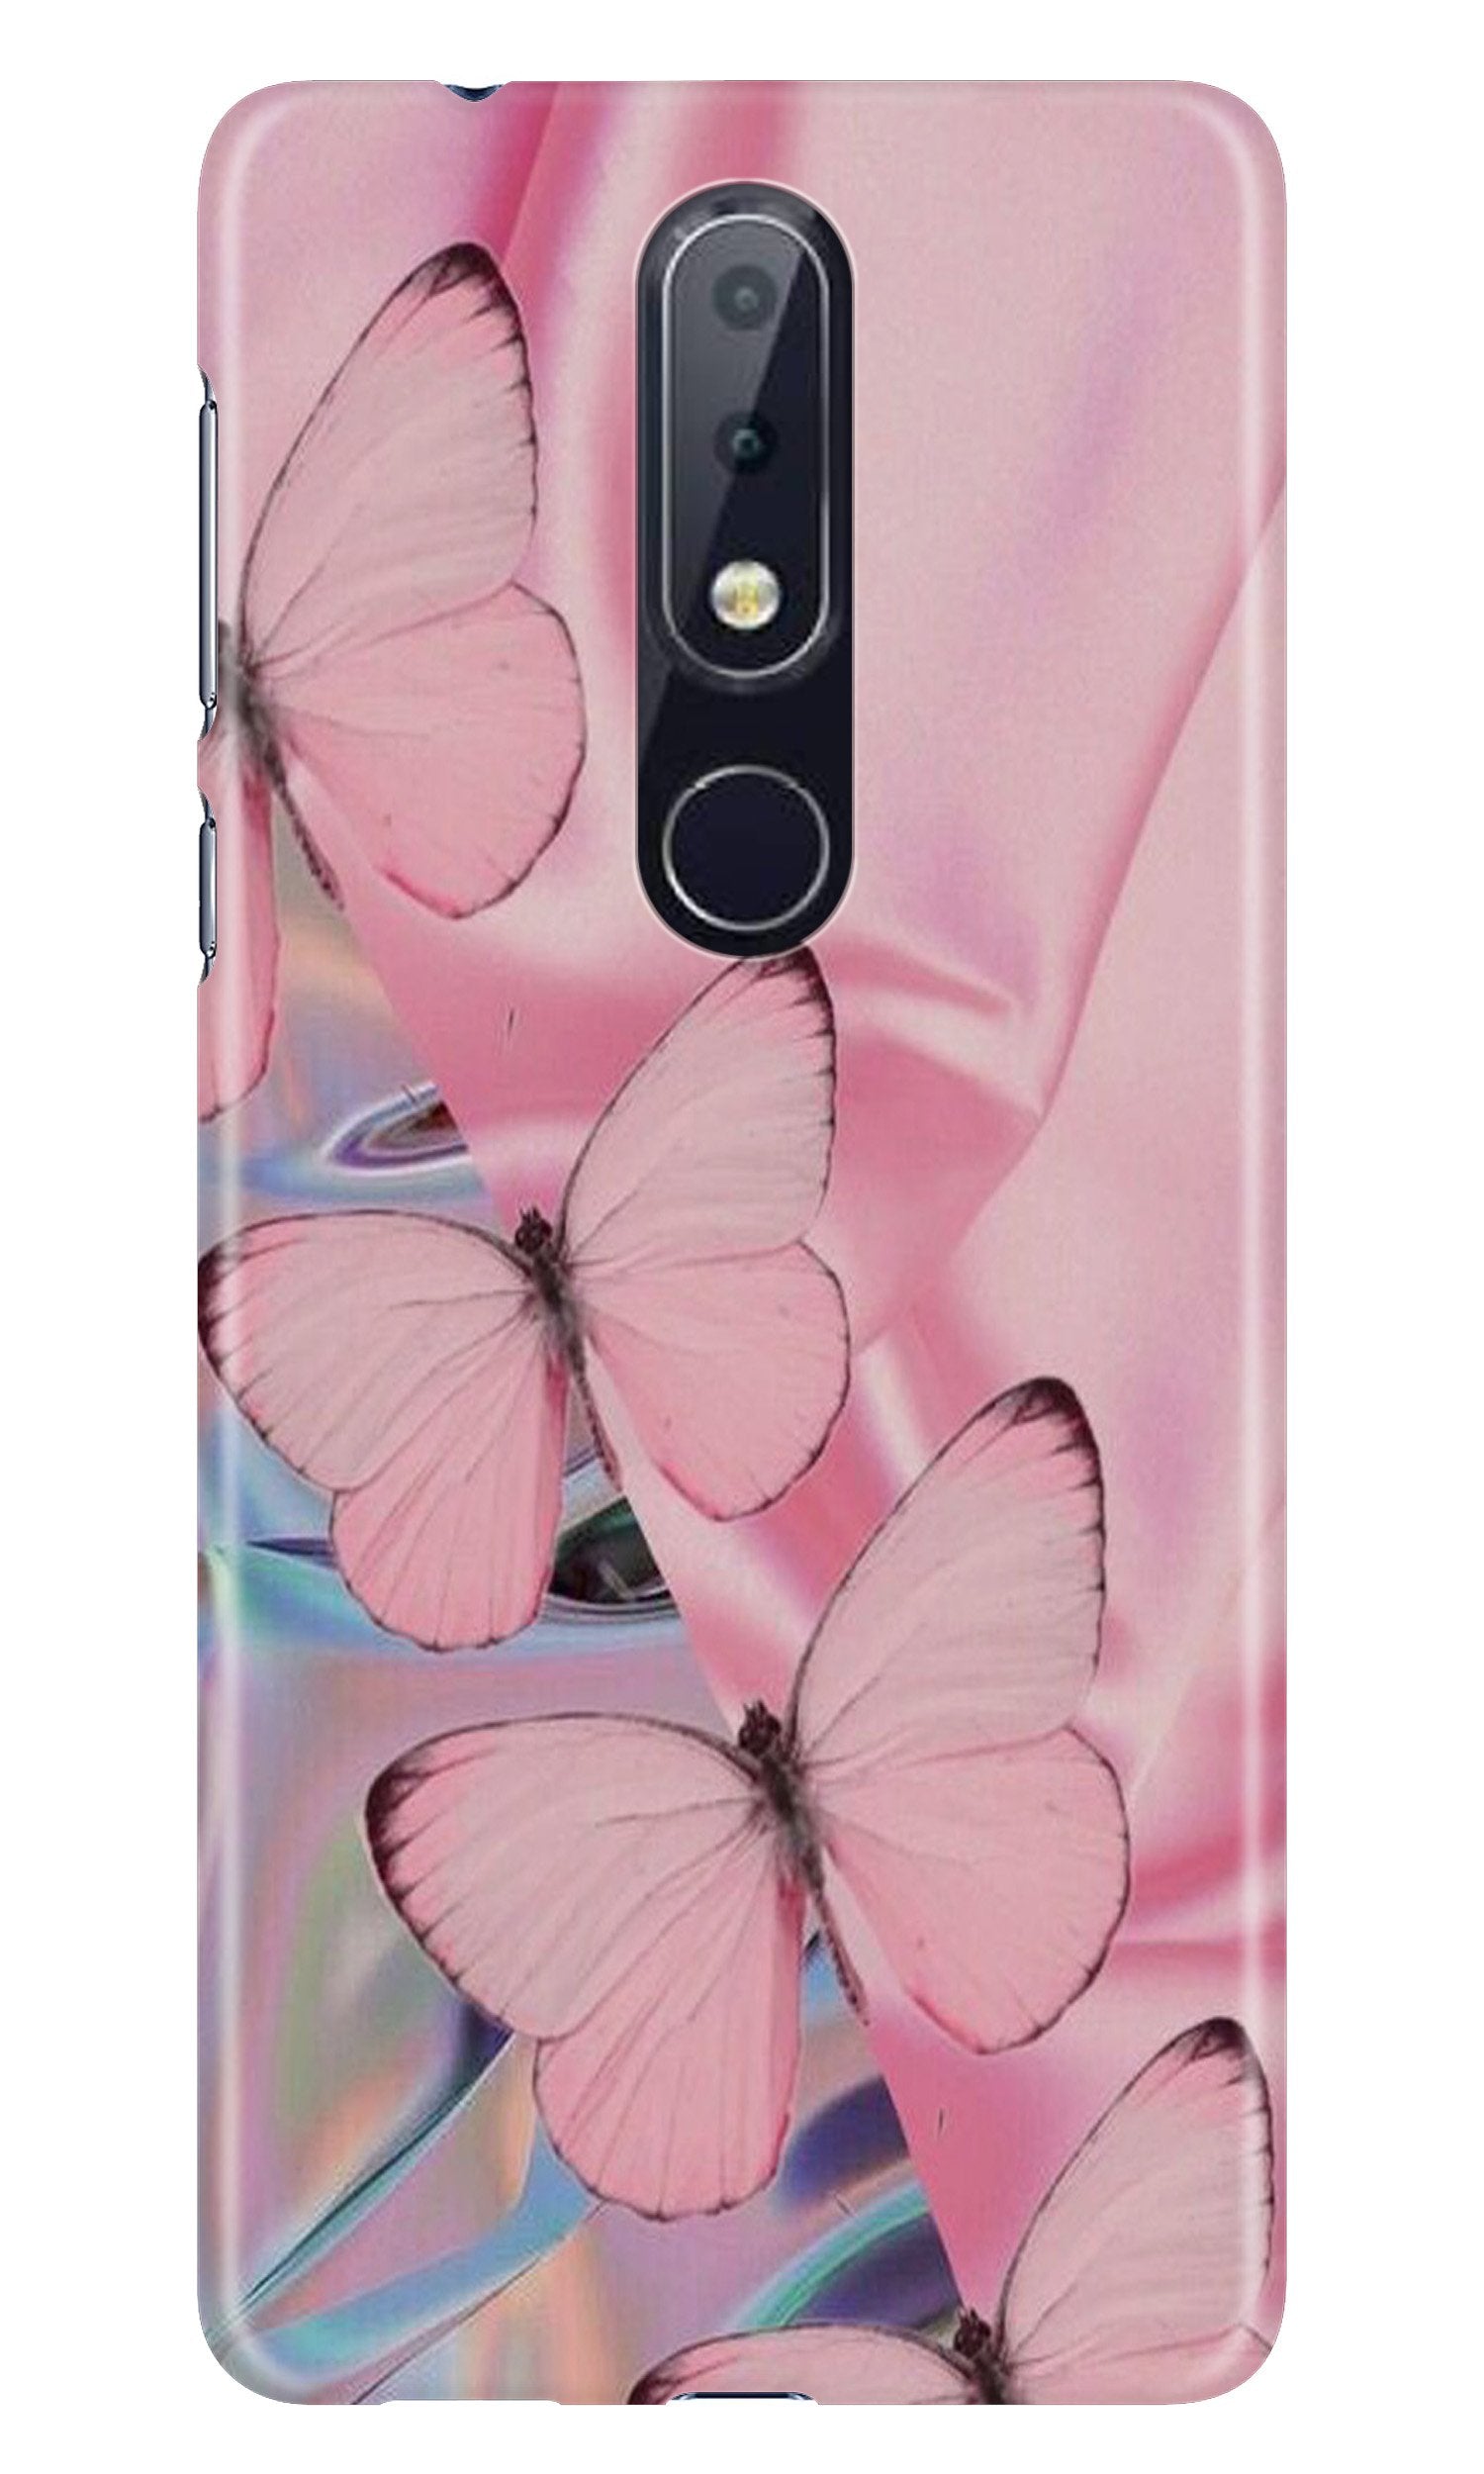 Butterflies Case for Nokia 7.1